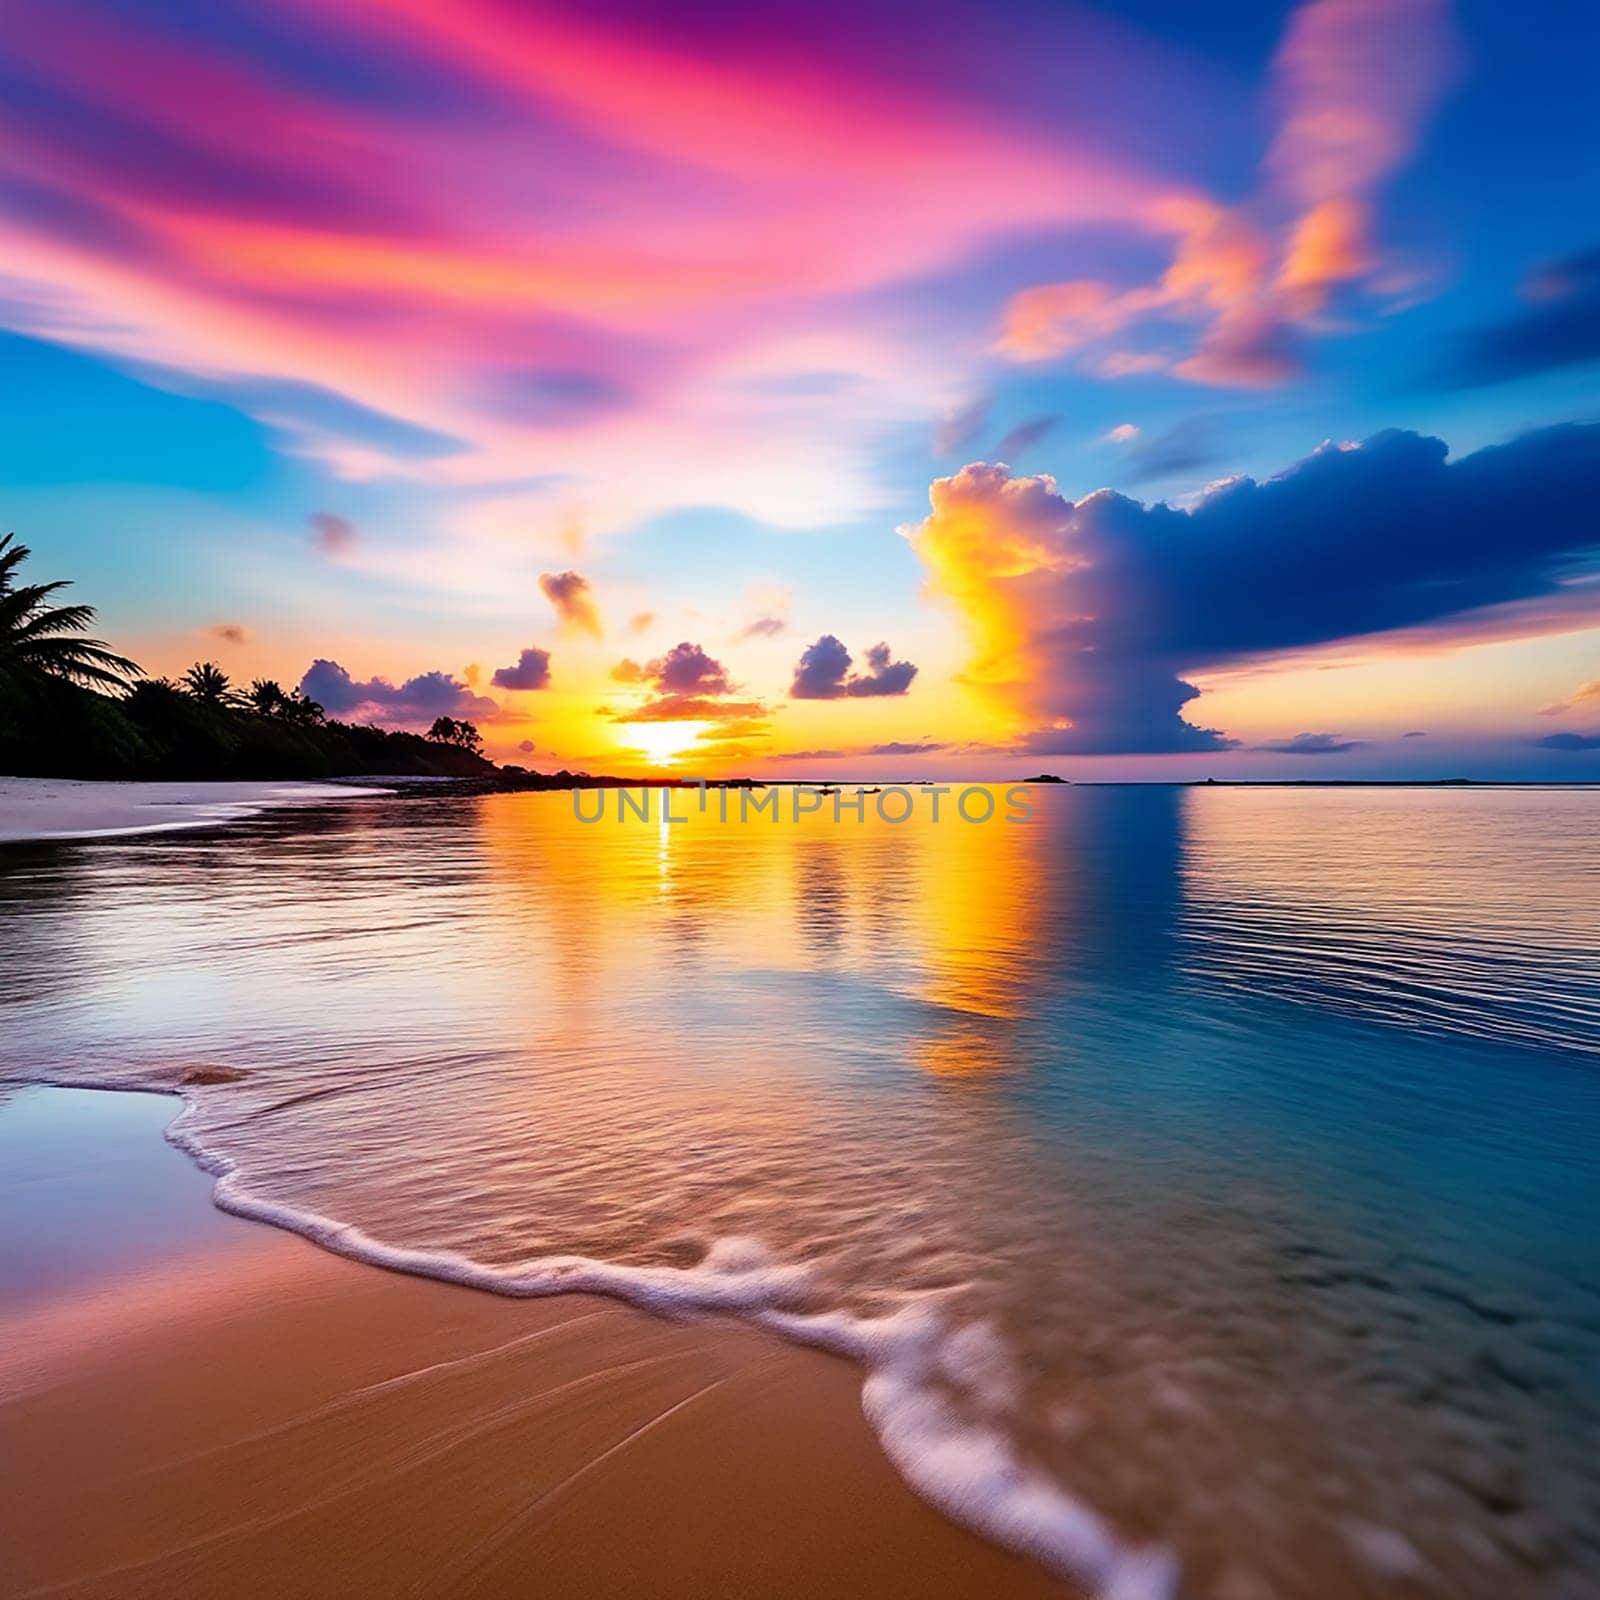 Captivating Morning Sunrise and Peaceful Sunset on Koh Samui Island, Thailand - A Stunning Seascape of Beauty